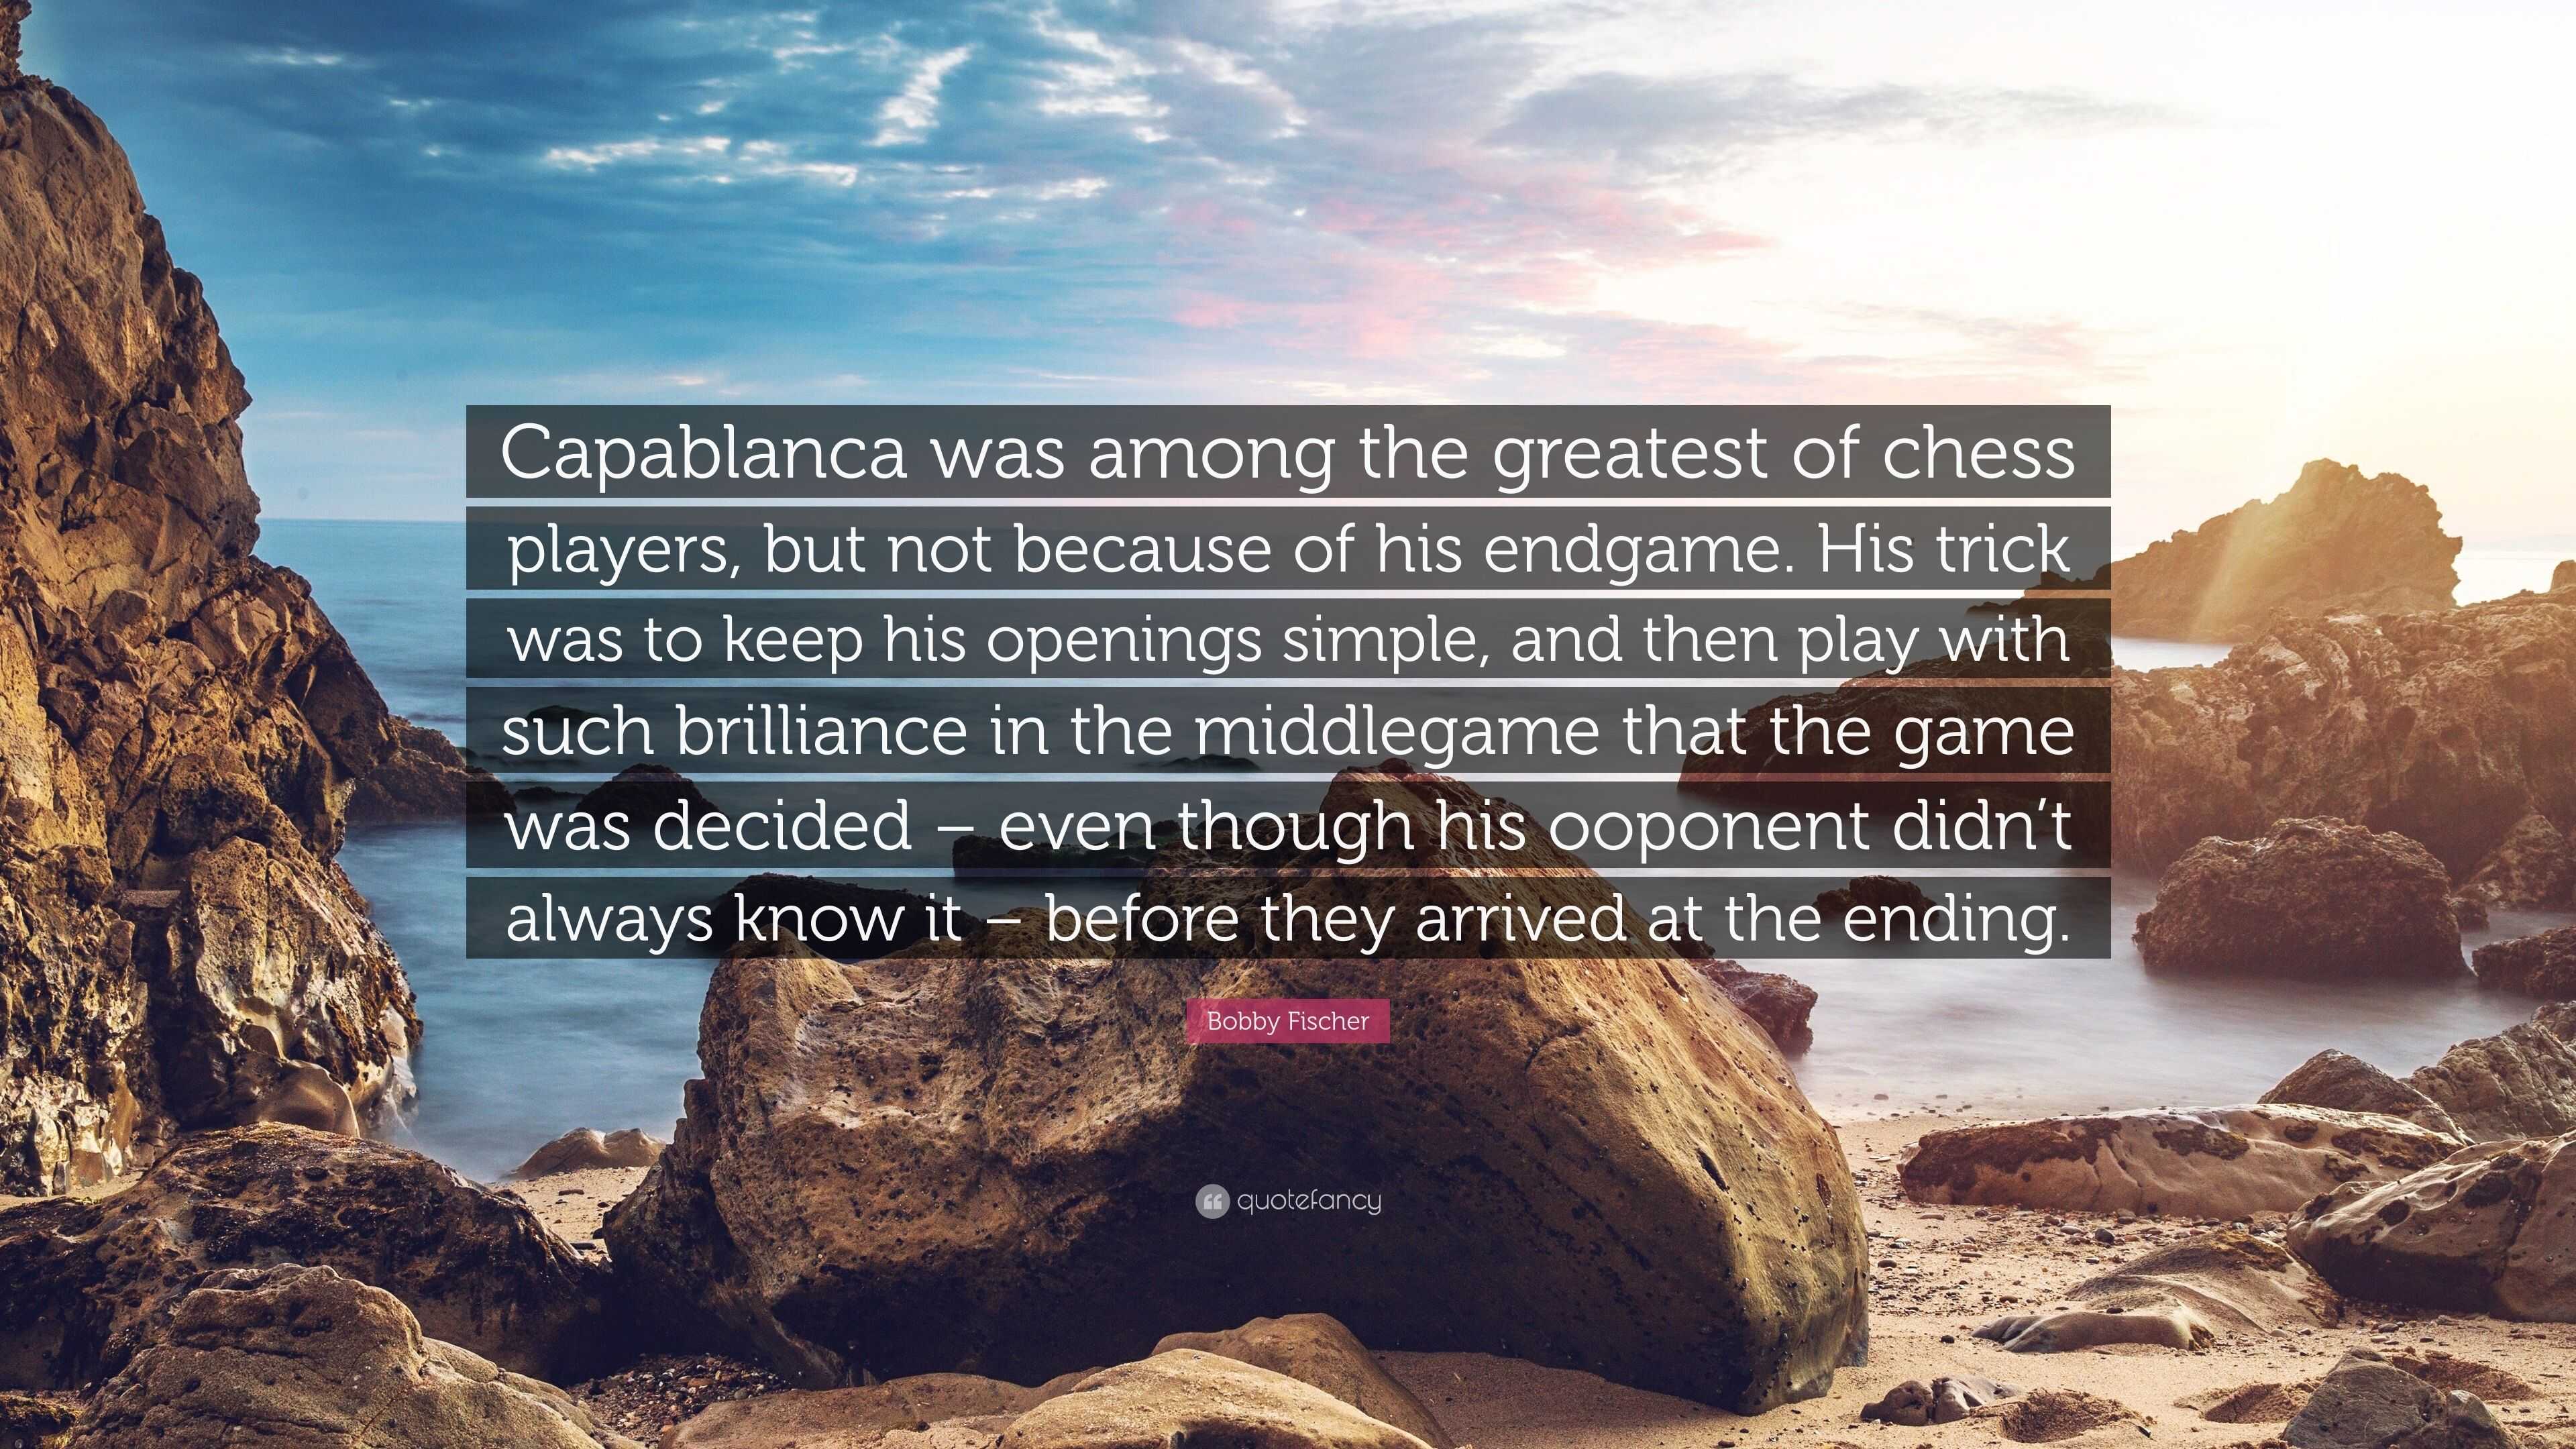 Why do you dislike Capablanca? - Quora